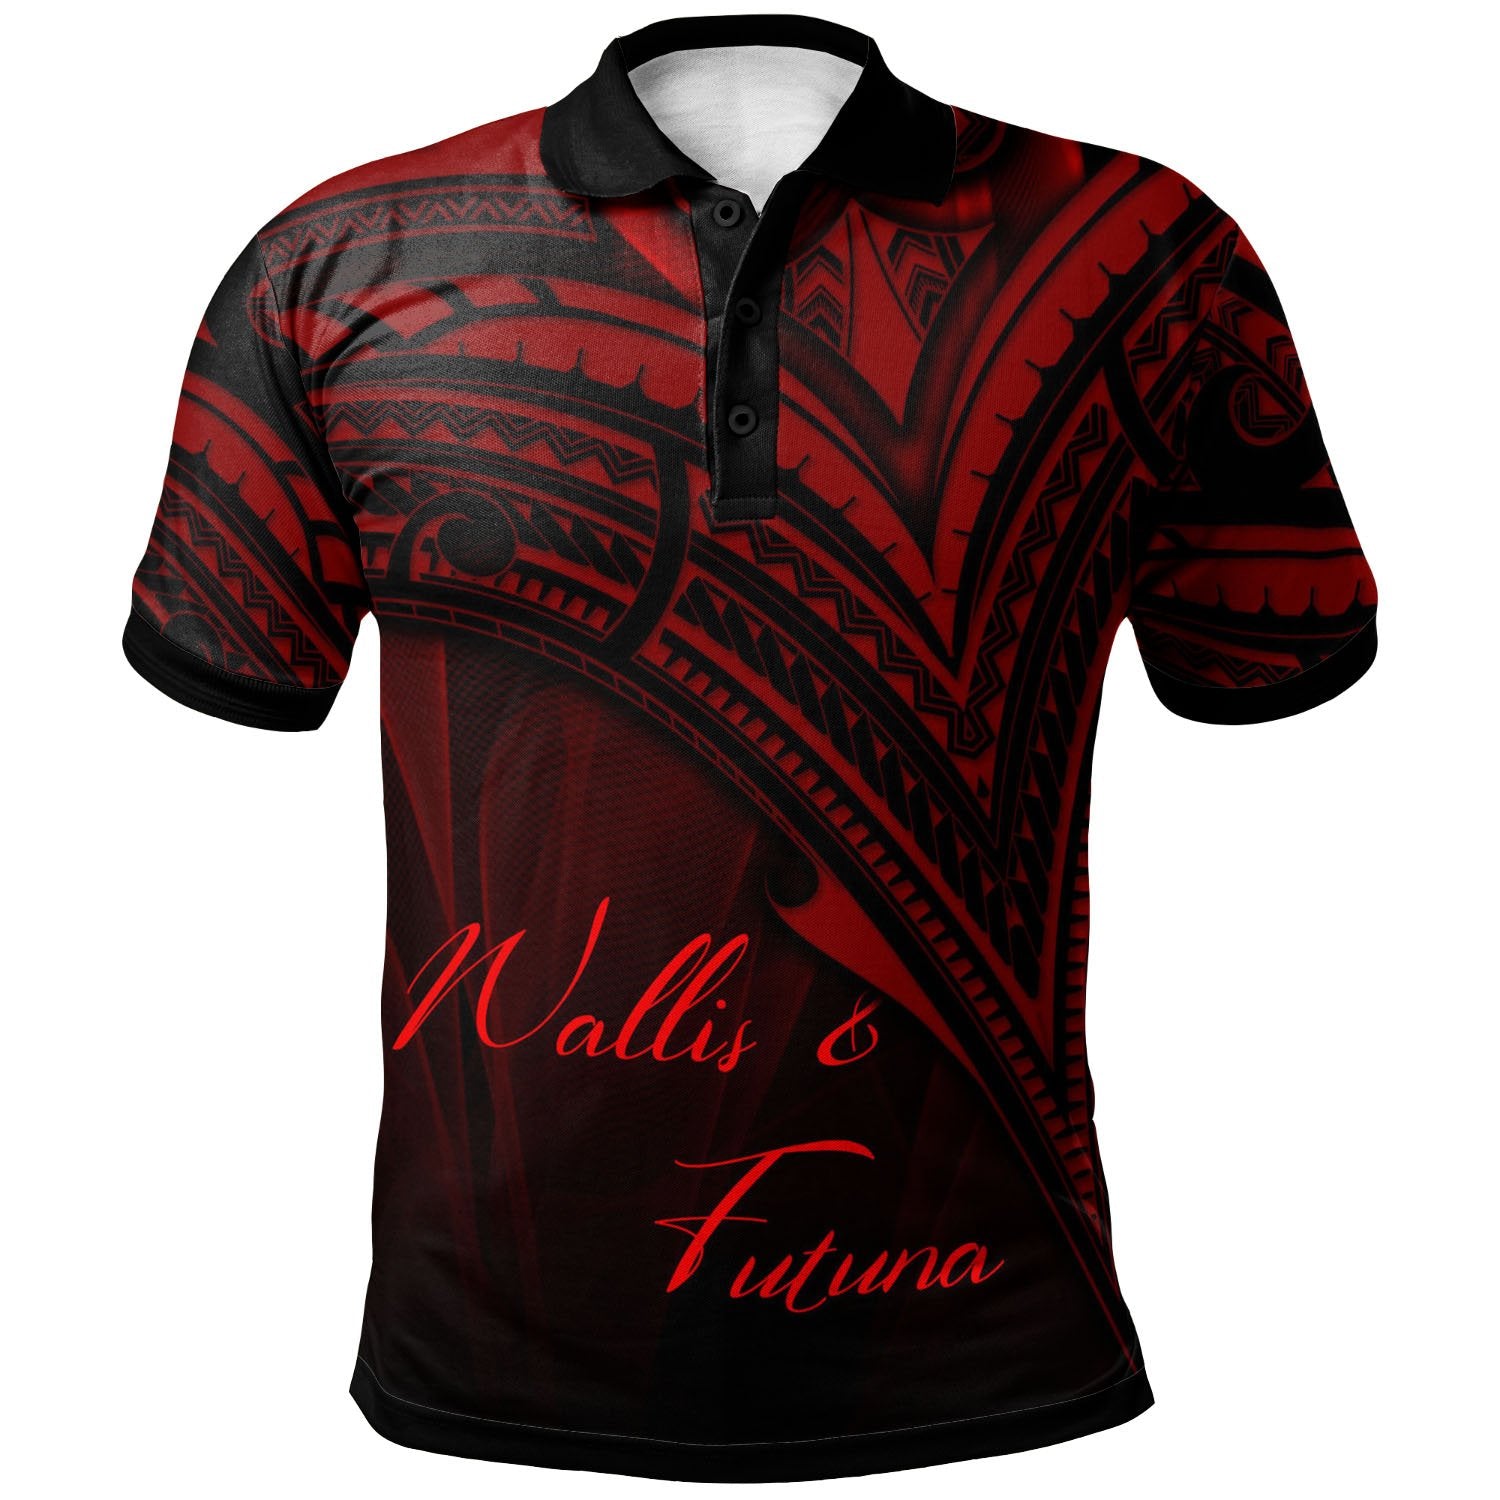 Wallis and Futuna Polo Shirt Red Color Cross Style Unisex Black - Polynesian Pride